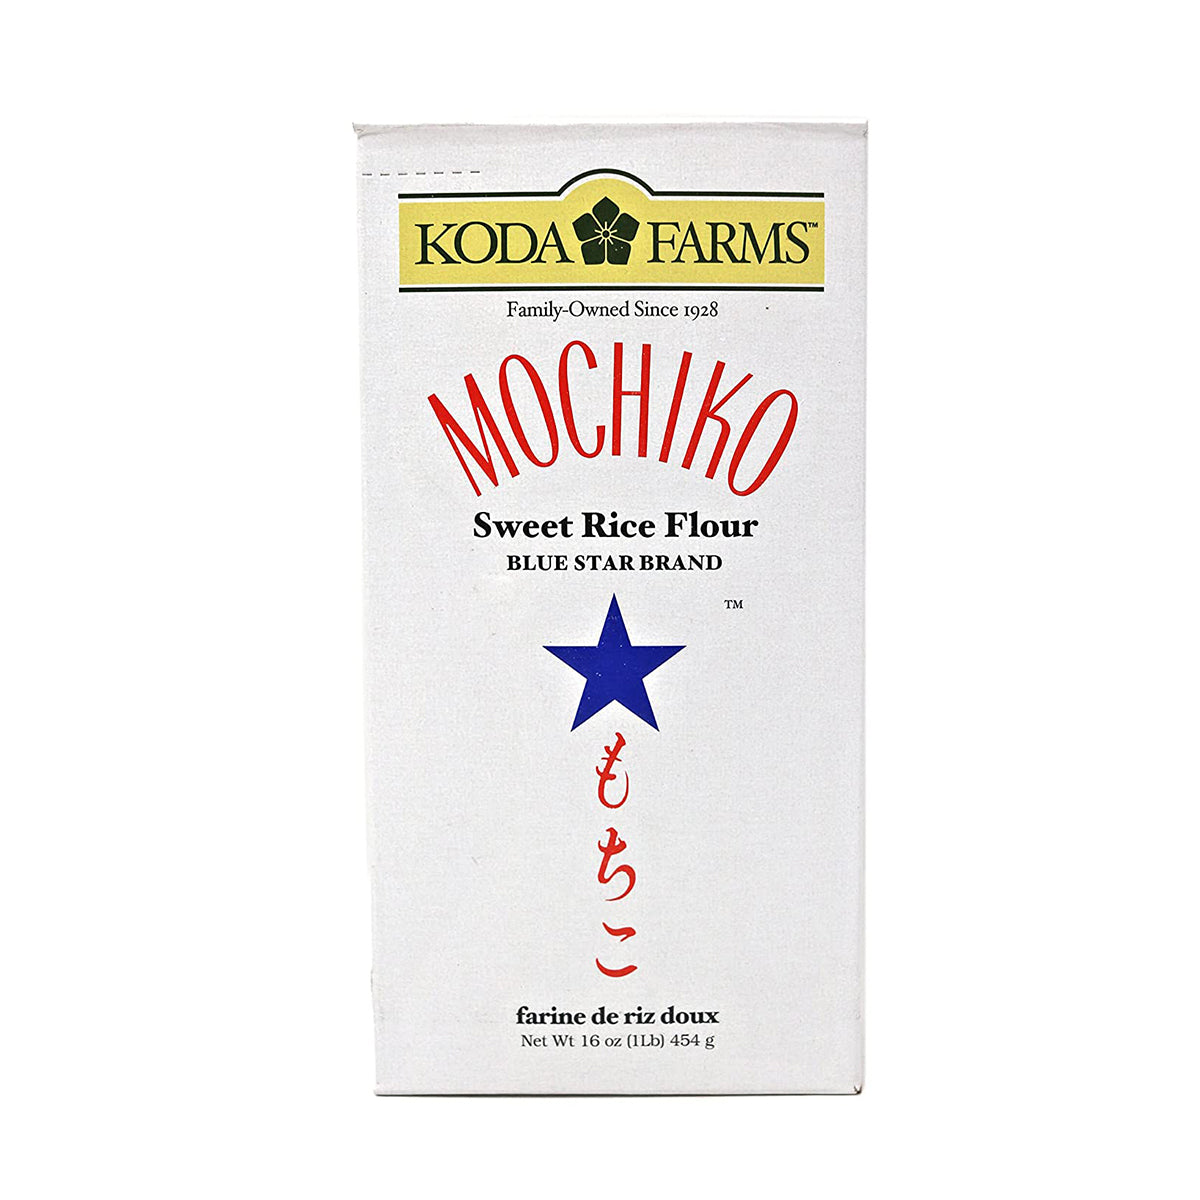 koda farms mochiko sweet rice flour - 16 oz